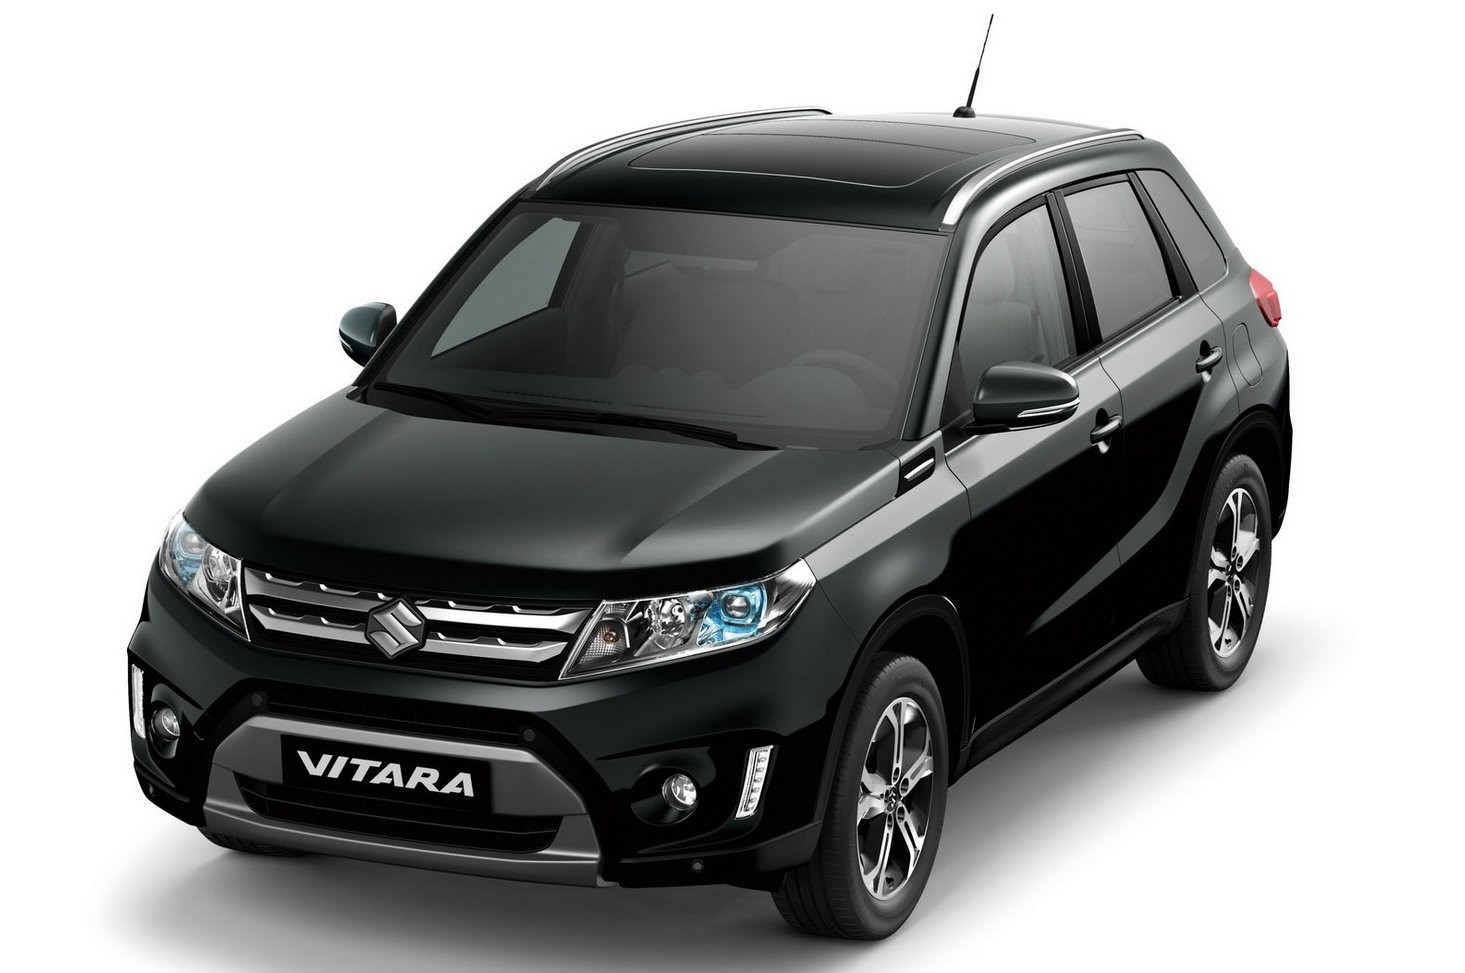 Suzuki Vitara Web Black Edition announced - Italy